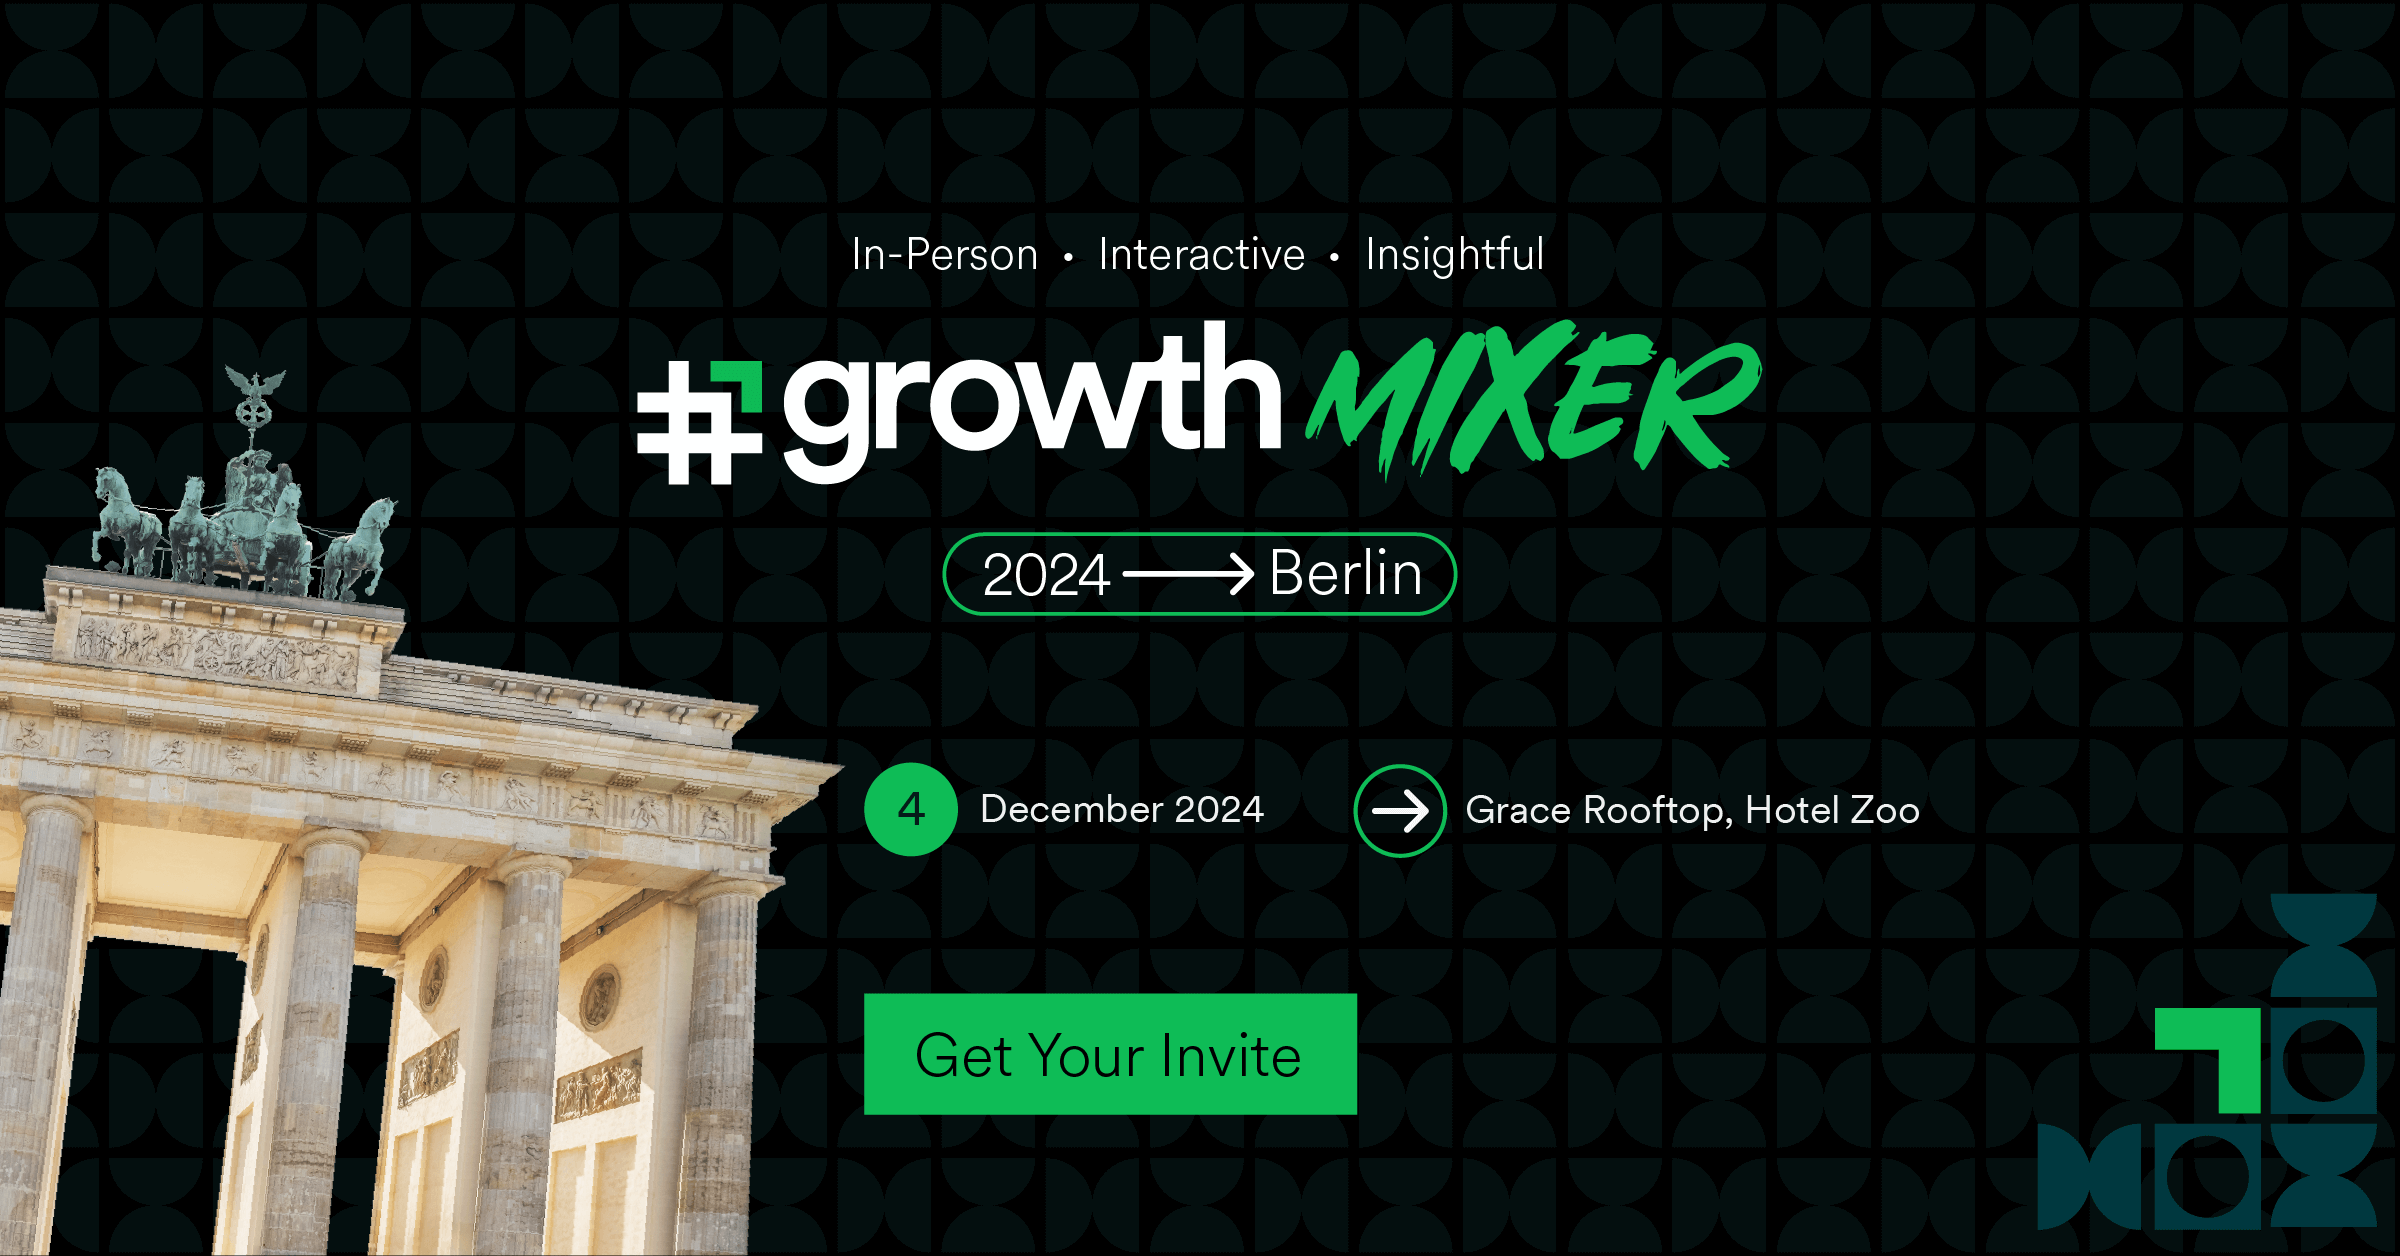 #GROWTH Mixer 2024 Berlin